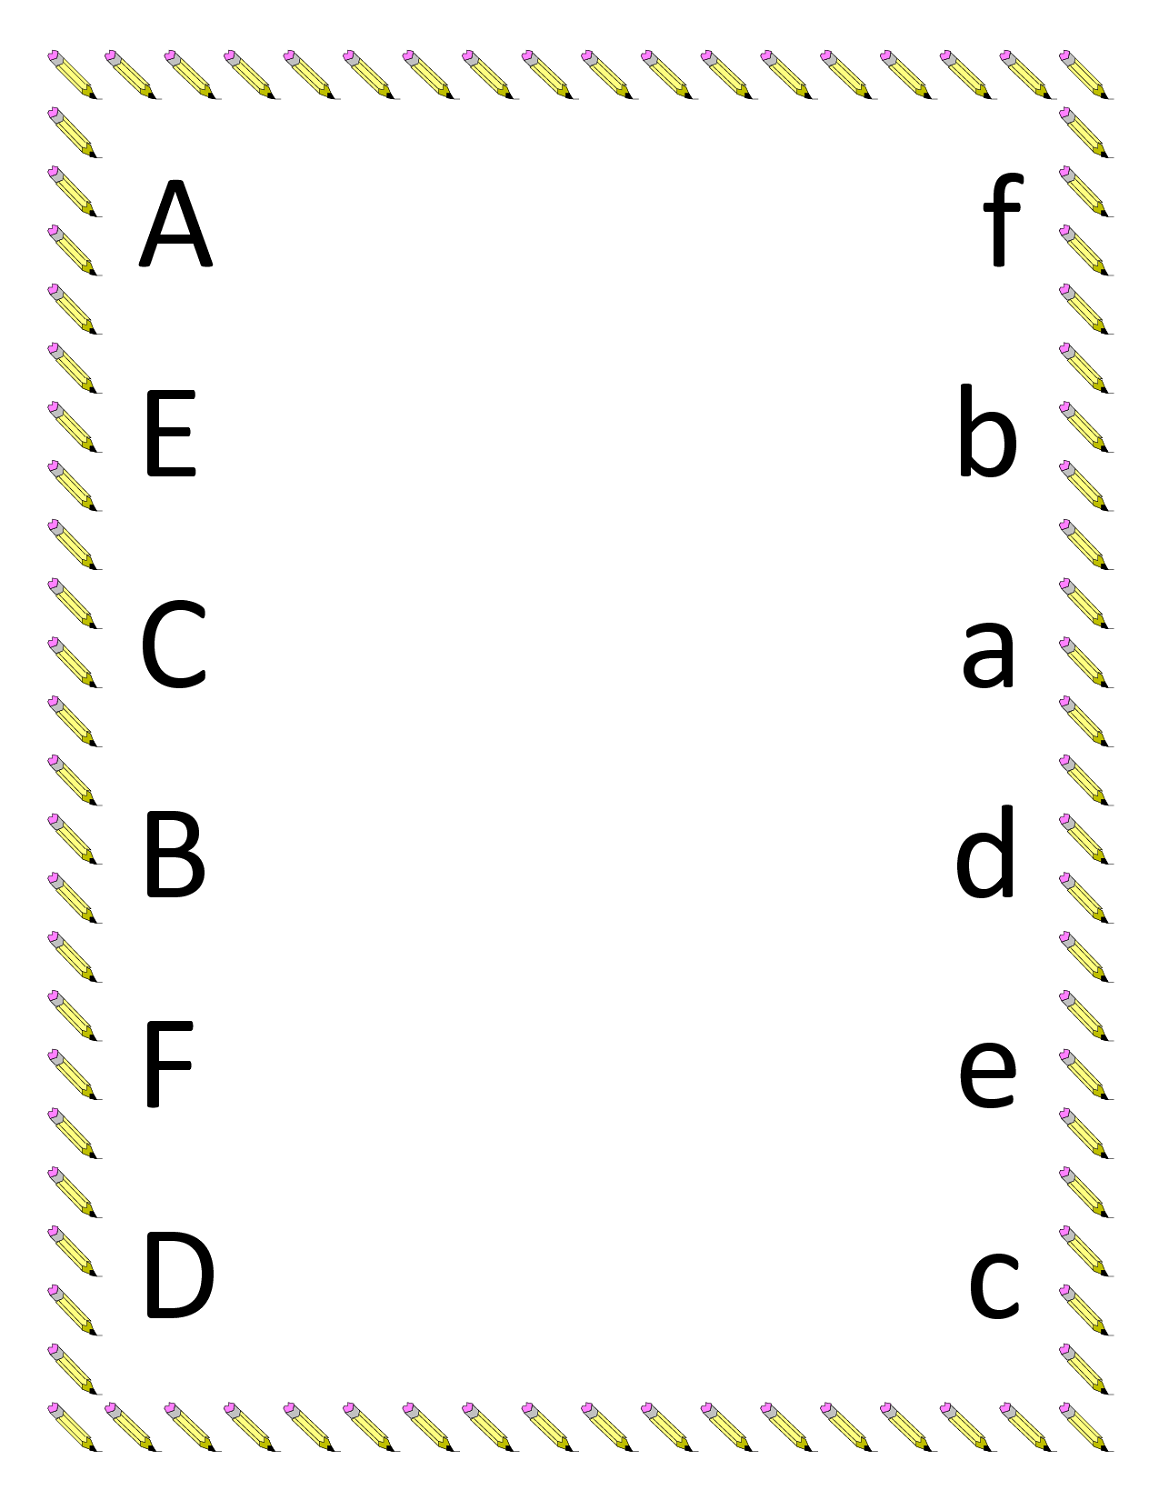 english-alphabet-worksheet-for-kindergarten-activity-shelter